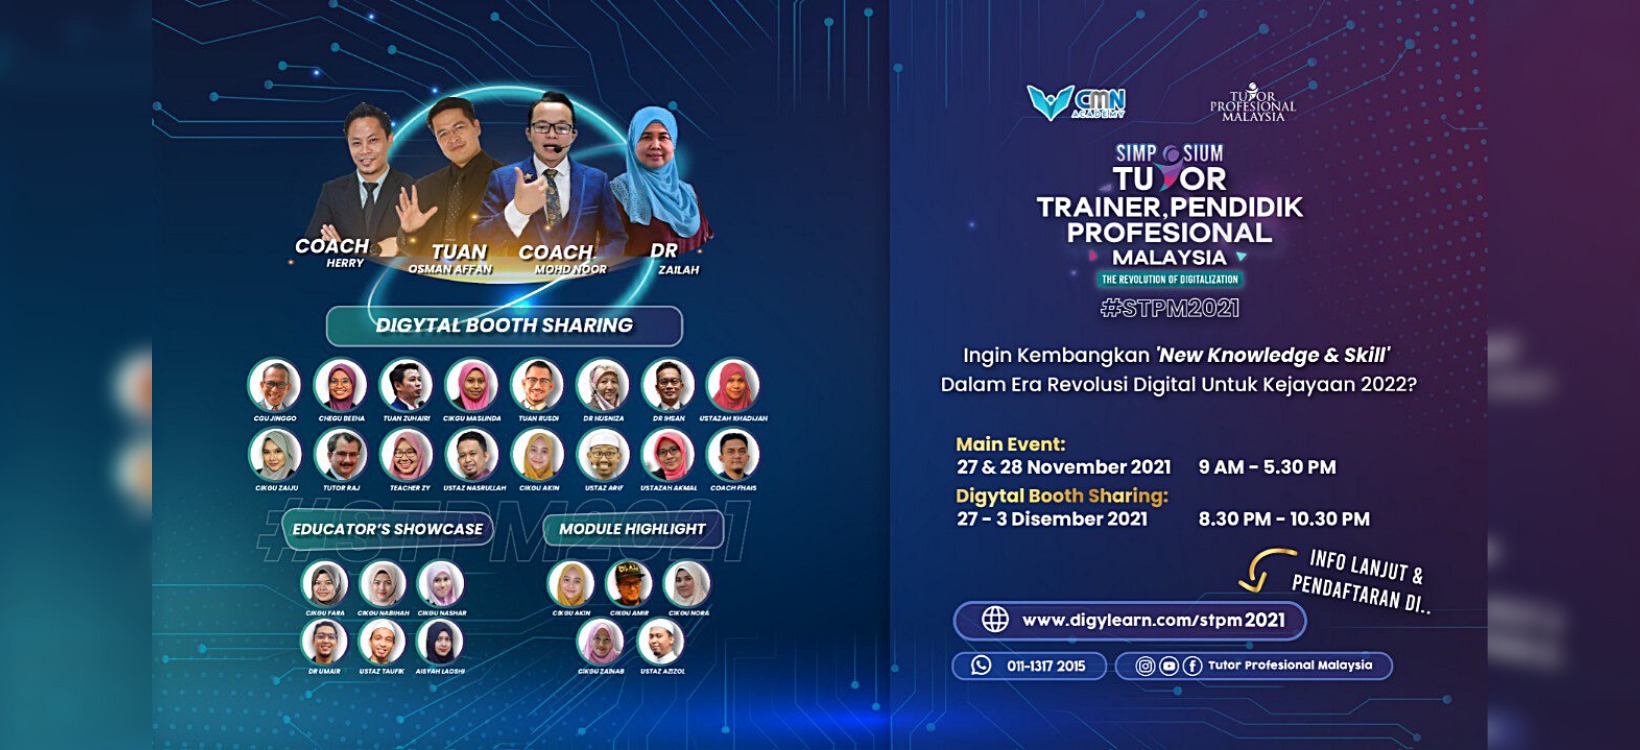 Simposium Tutor, Trainer, Pendidik Profesional Malaysia #STPM2022